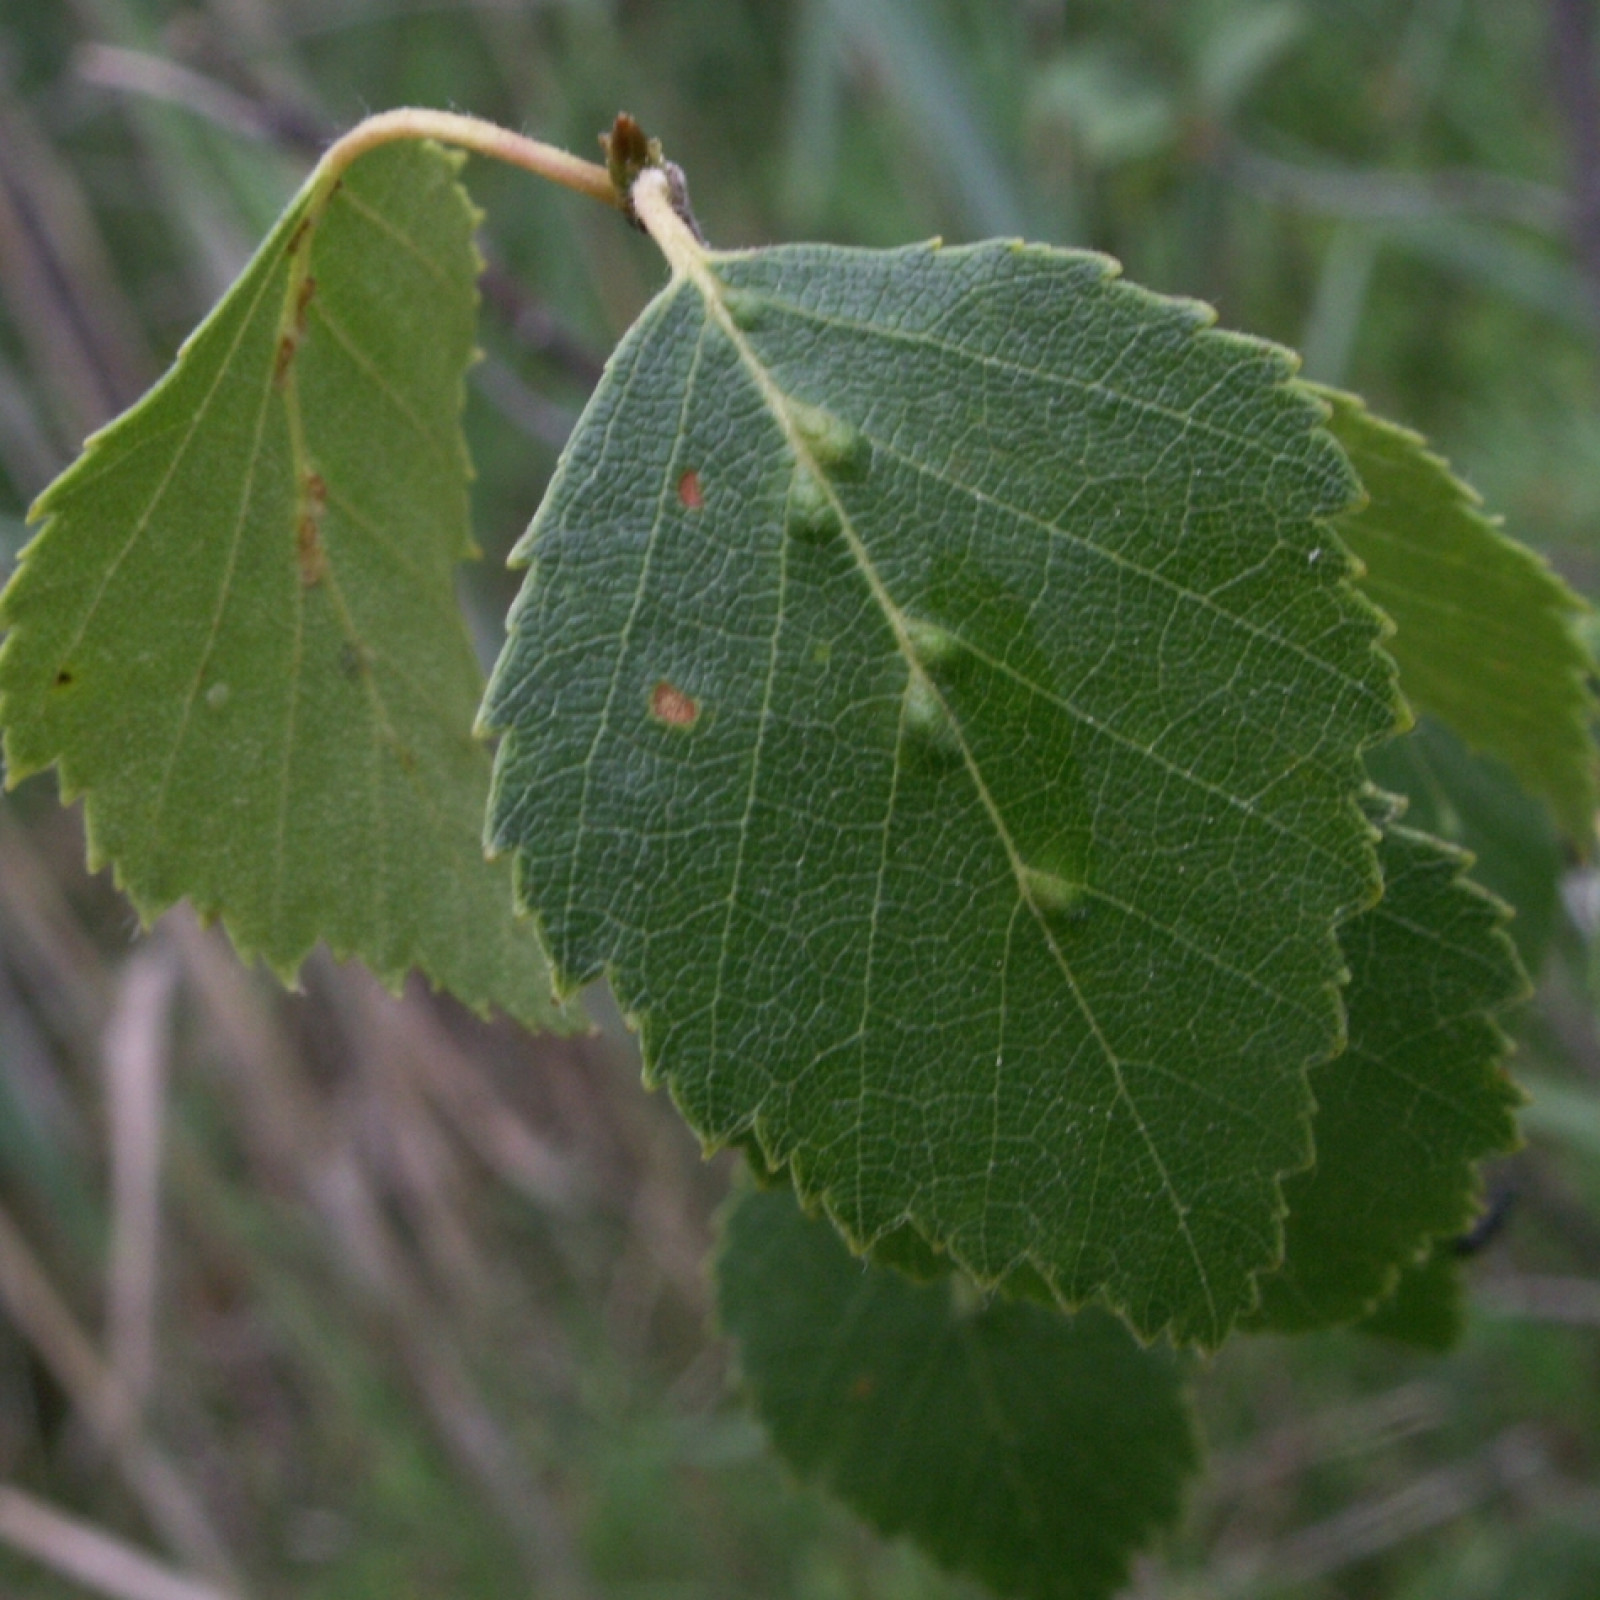 brzoza-omszona-betula-pubescens-opis-wygl-d-wymagania-uprawa-i